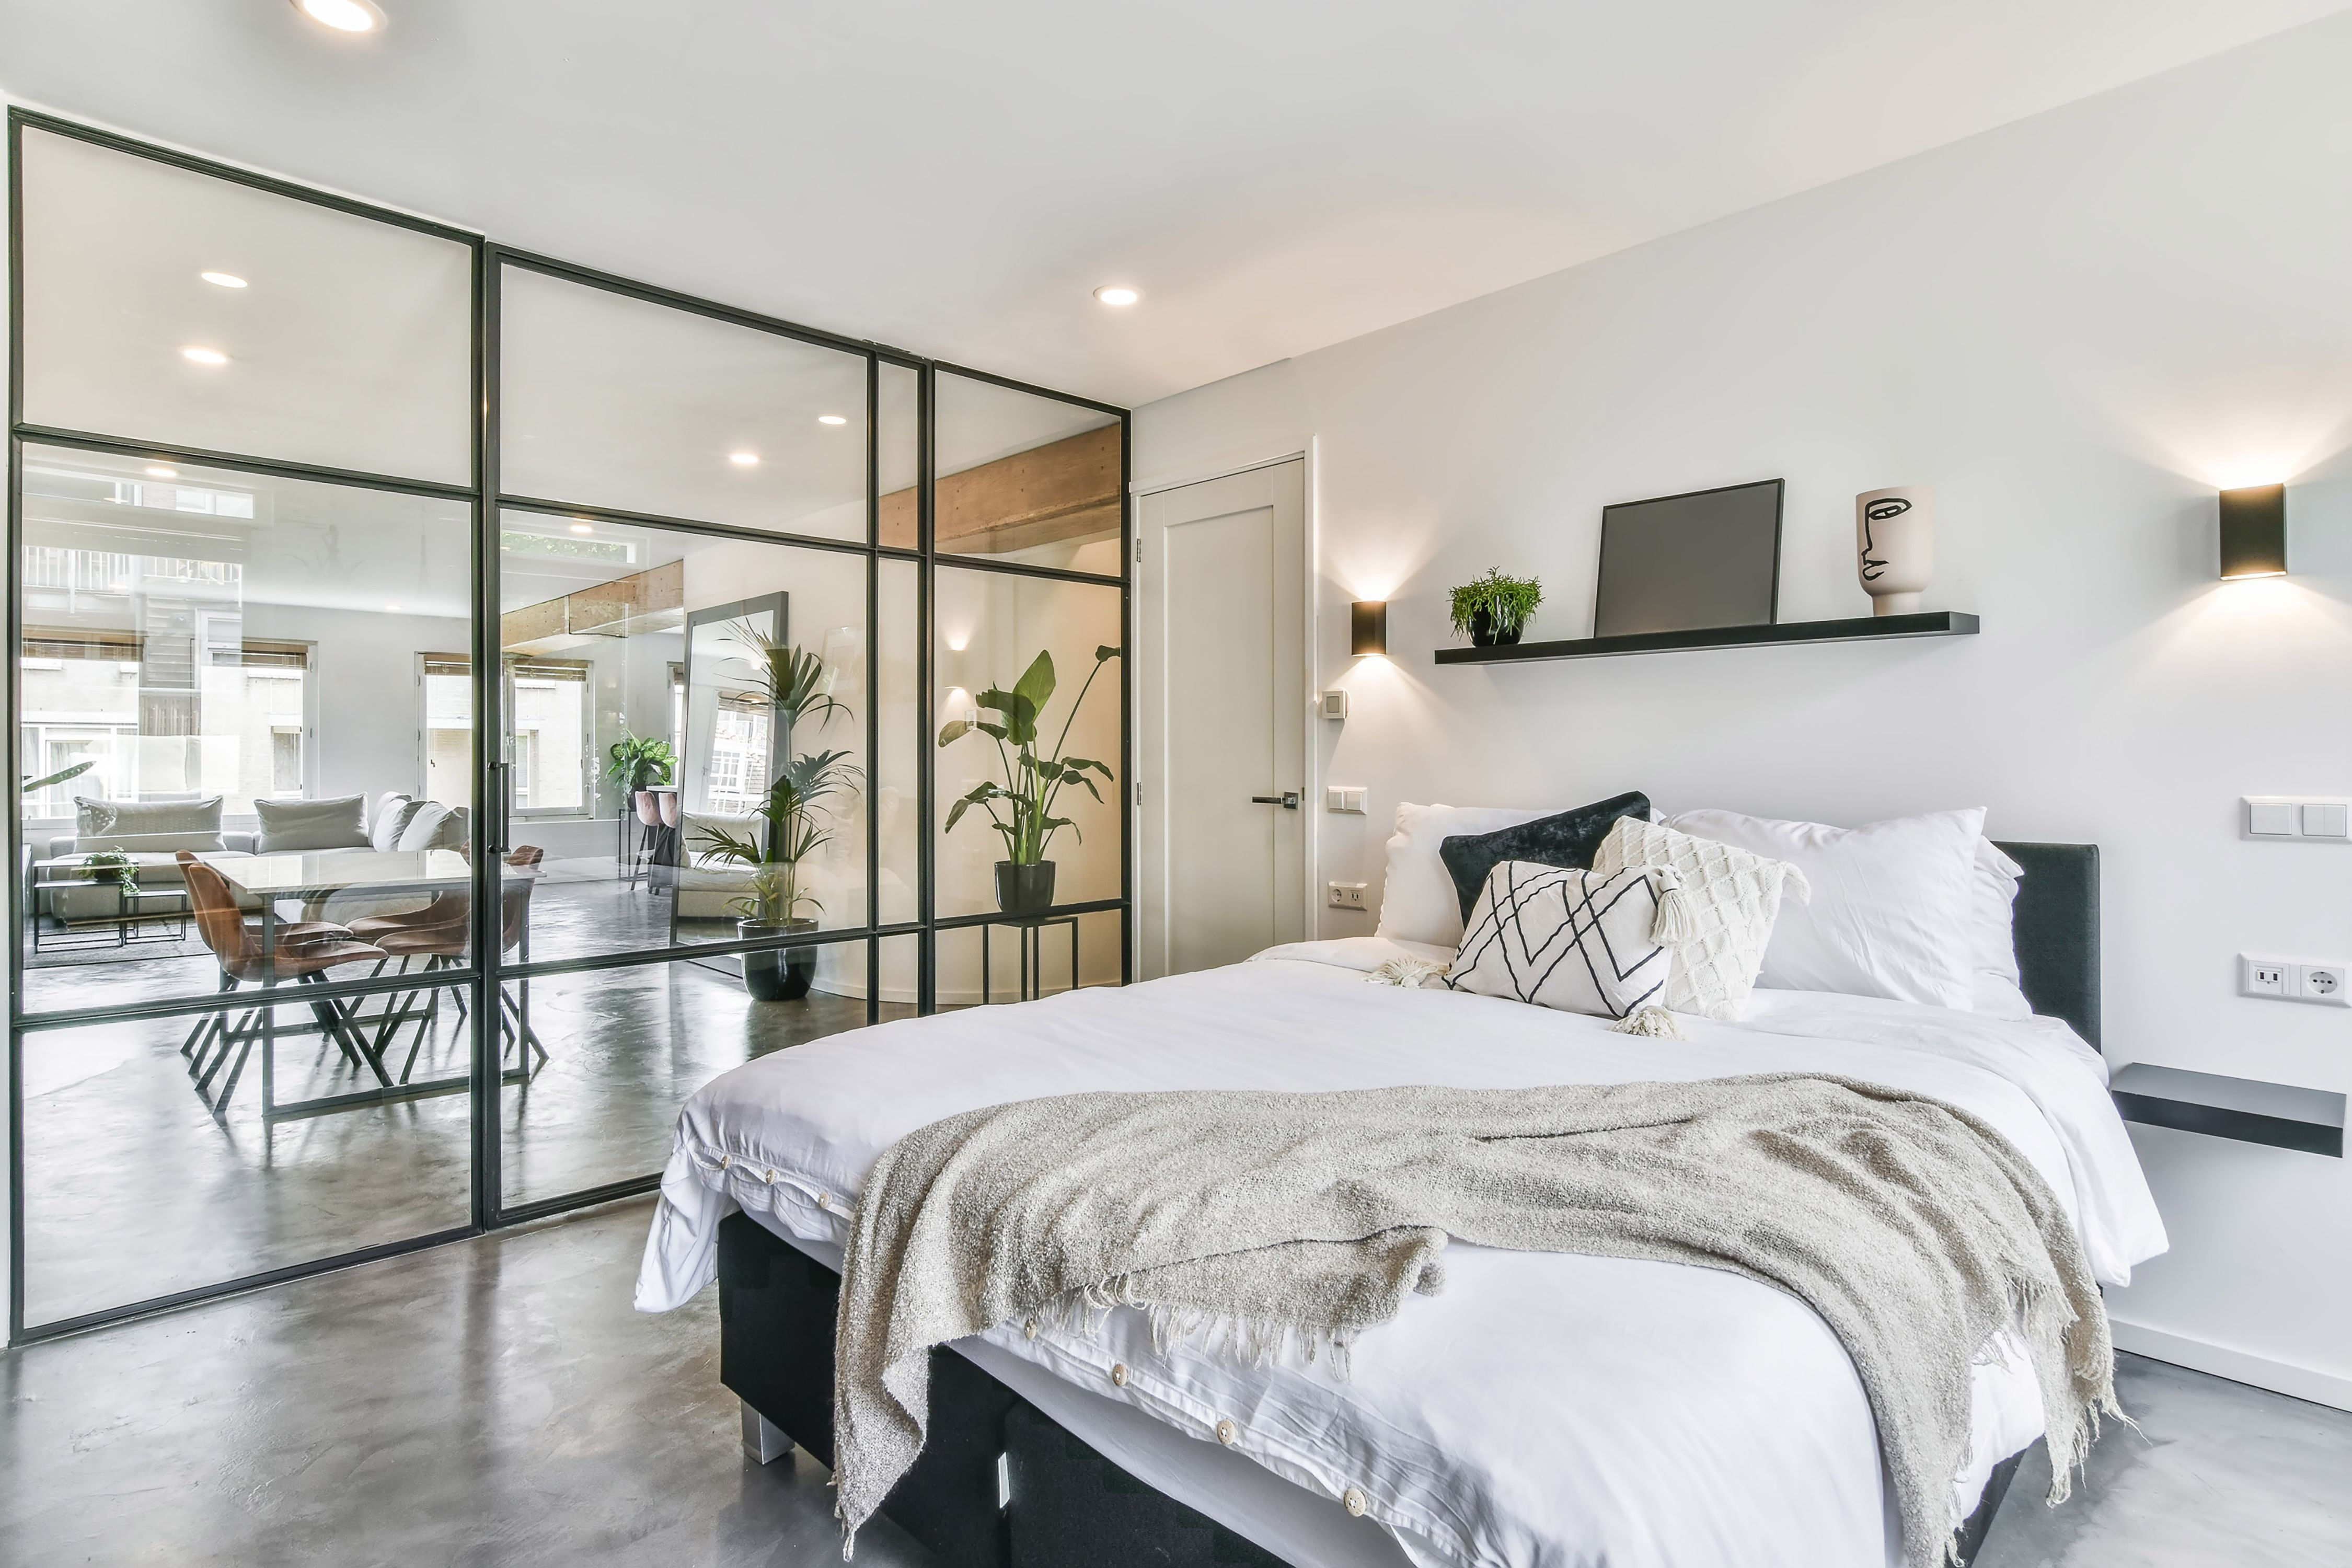 Modern bedroom villa furniture styles